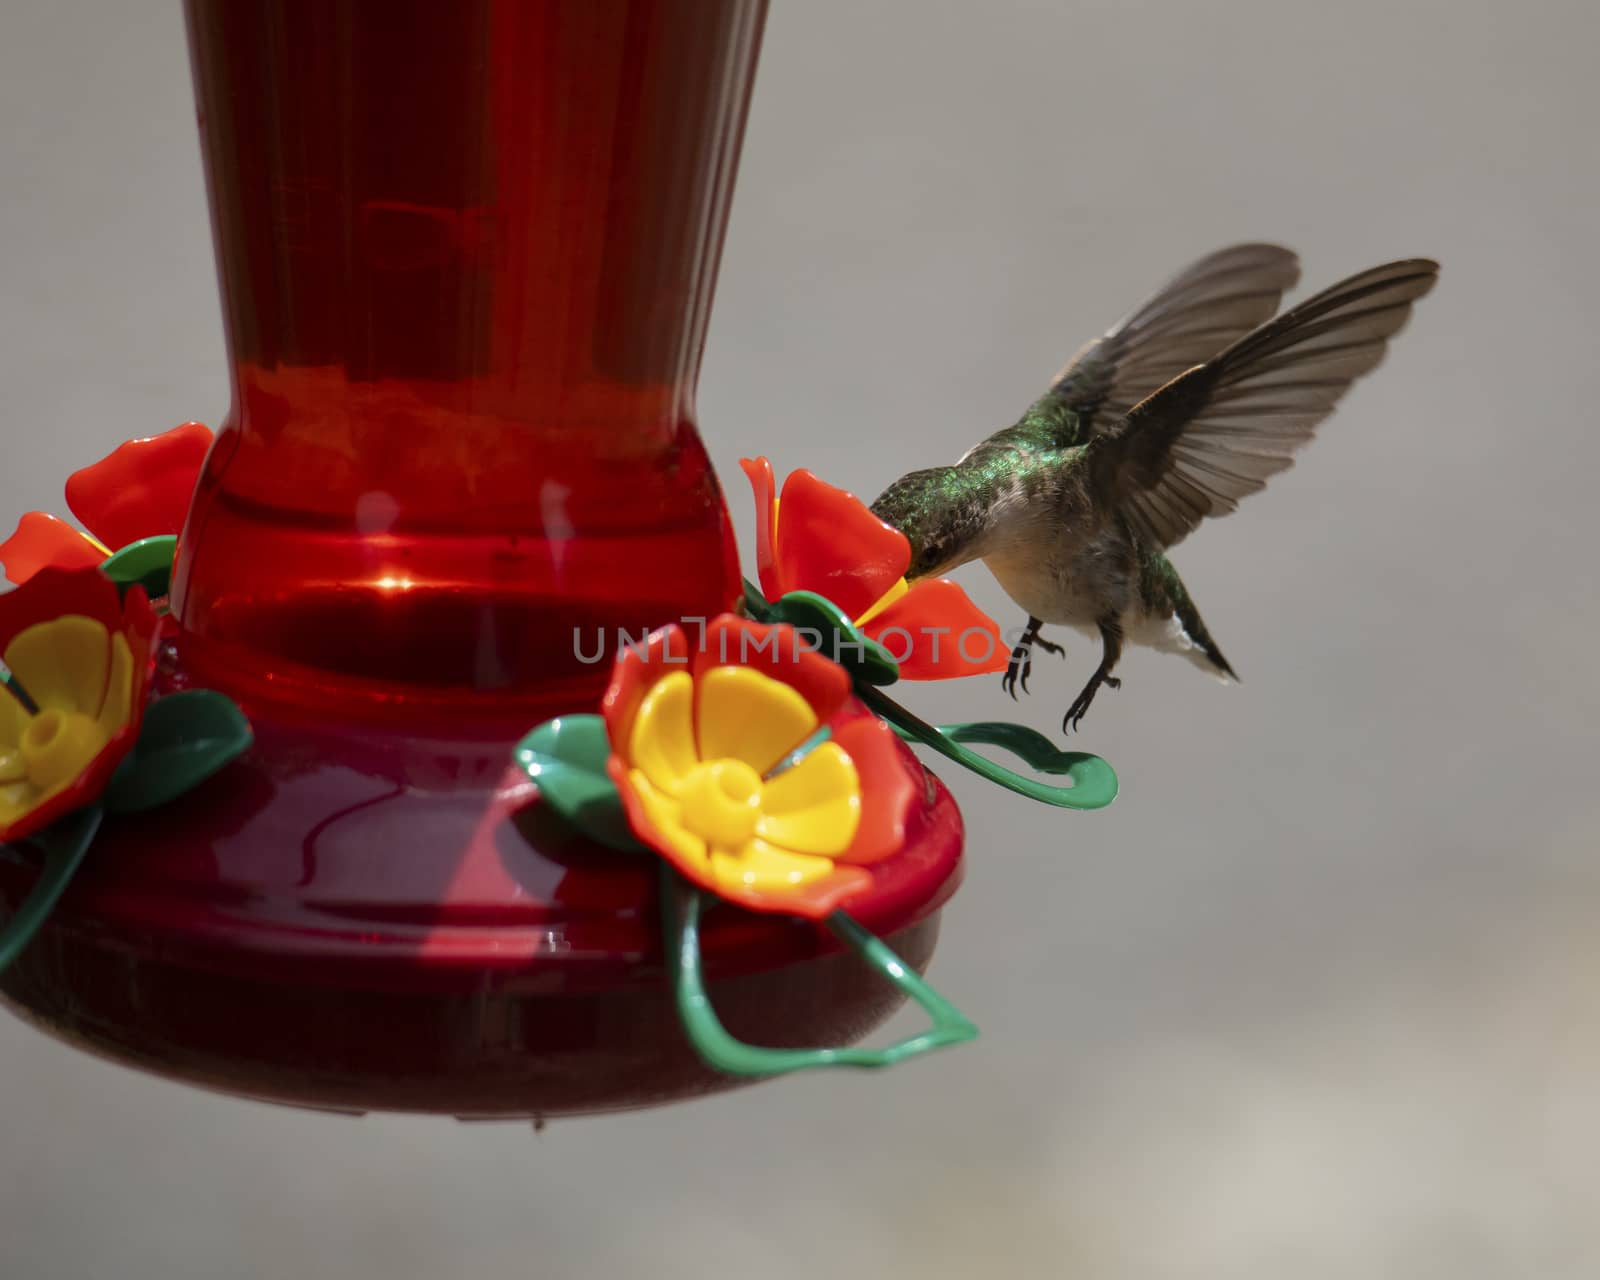 Hummingbird Hovers While Feeding by CharlieFloyd